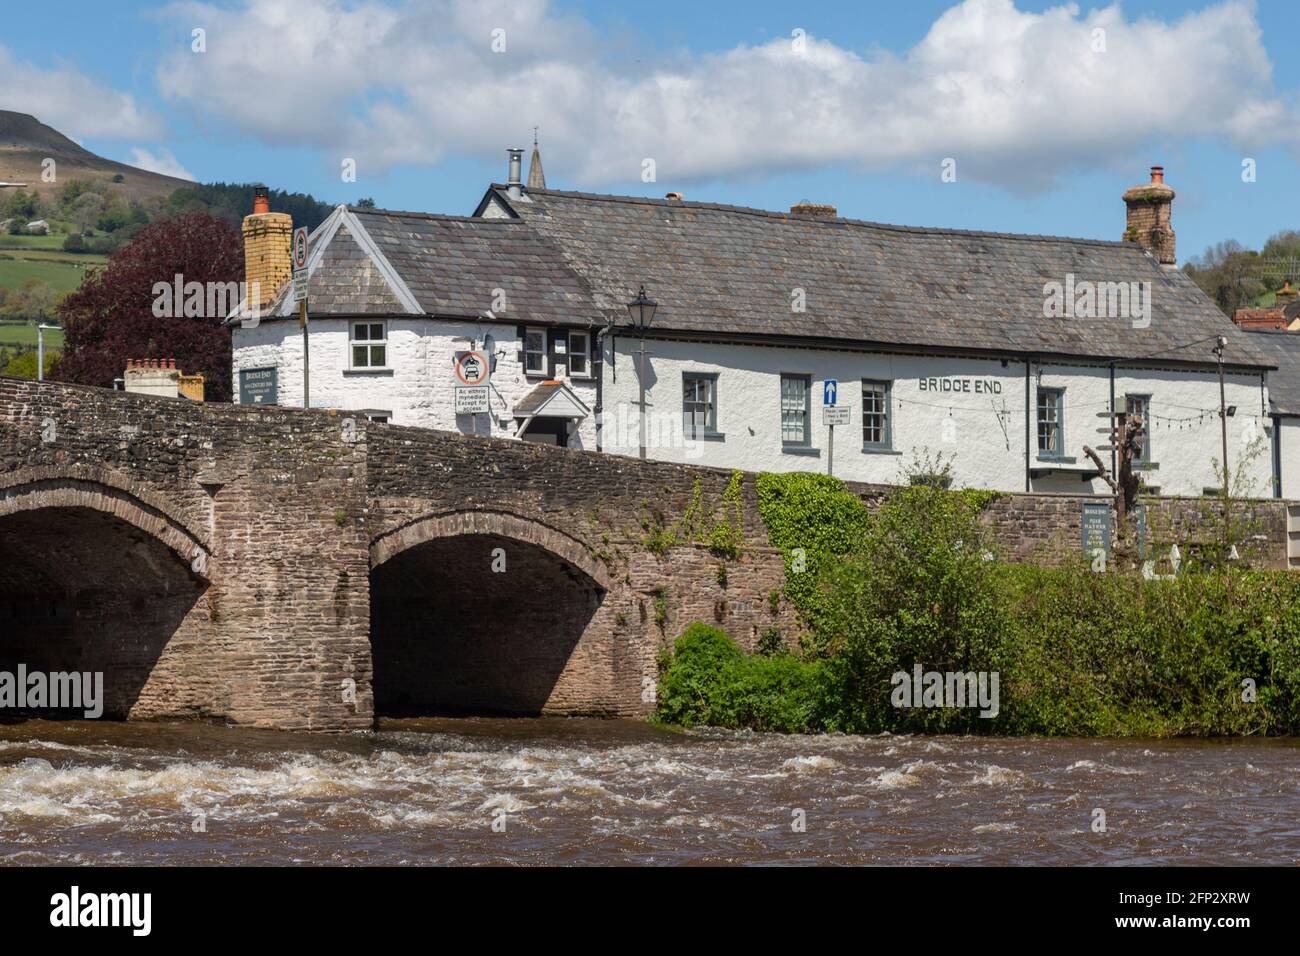 The Bridge End Inn, near the seventeenth century bridge at Crickhowell, in the Brecon Beacon National Park, Powys, Wales Stock Photo